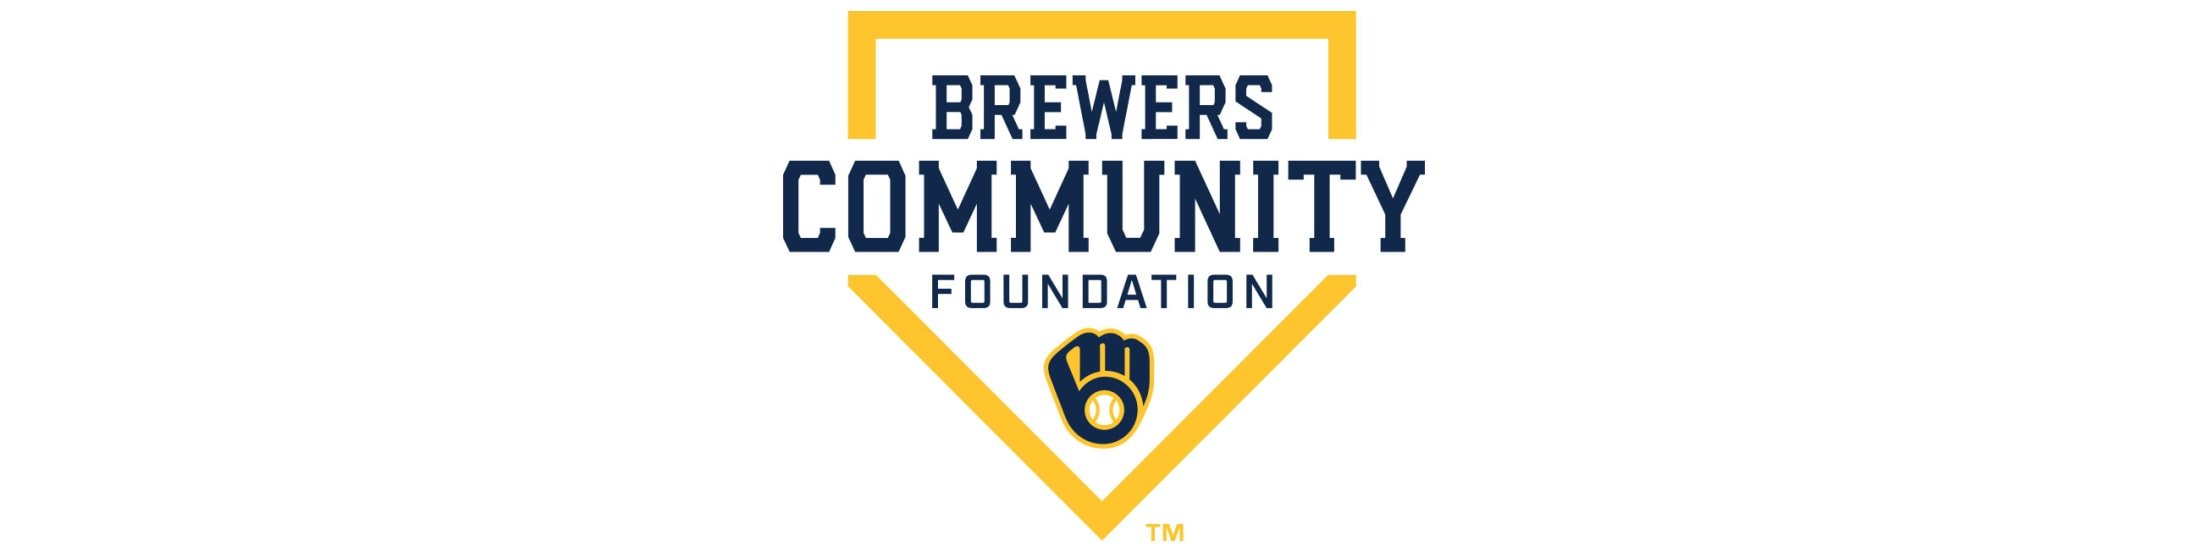 Brewers Community Foundation.jpeg